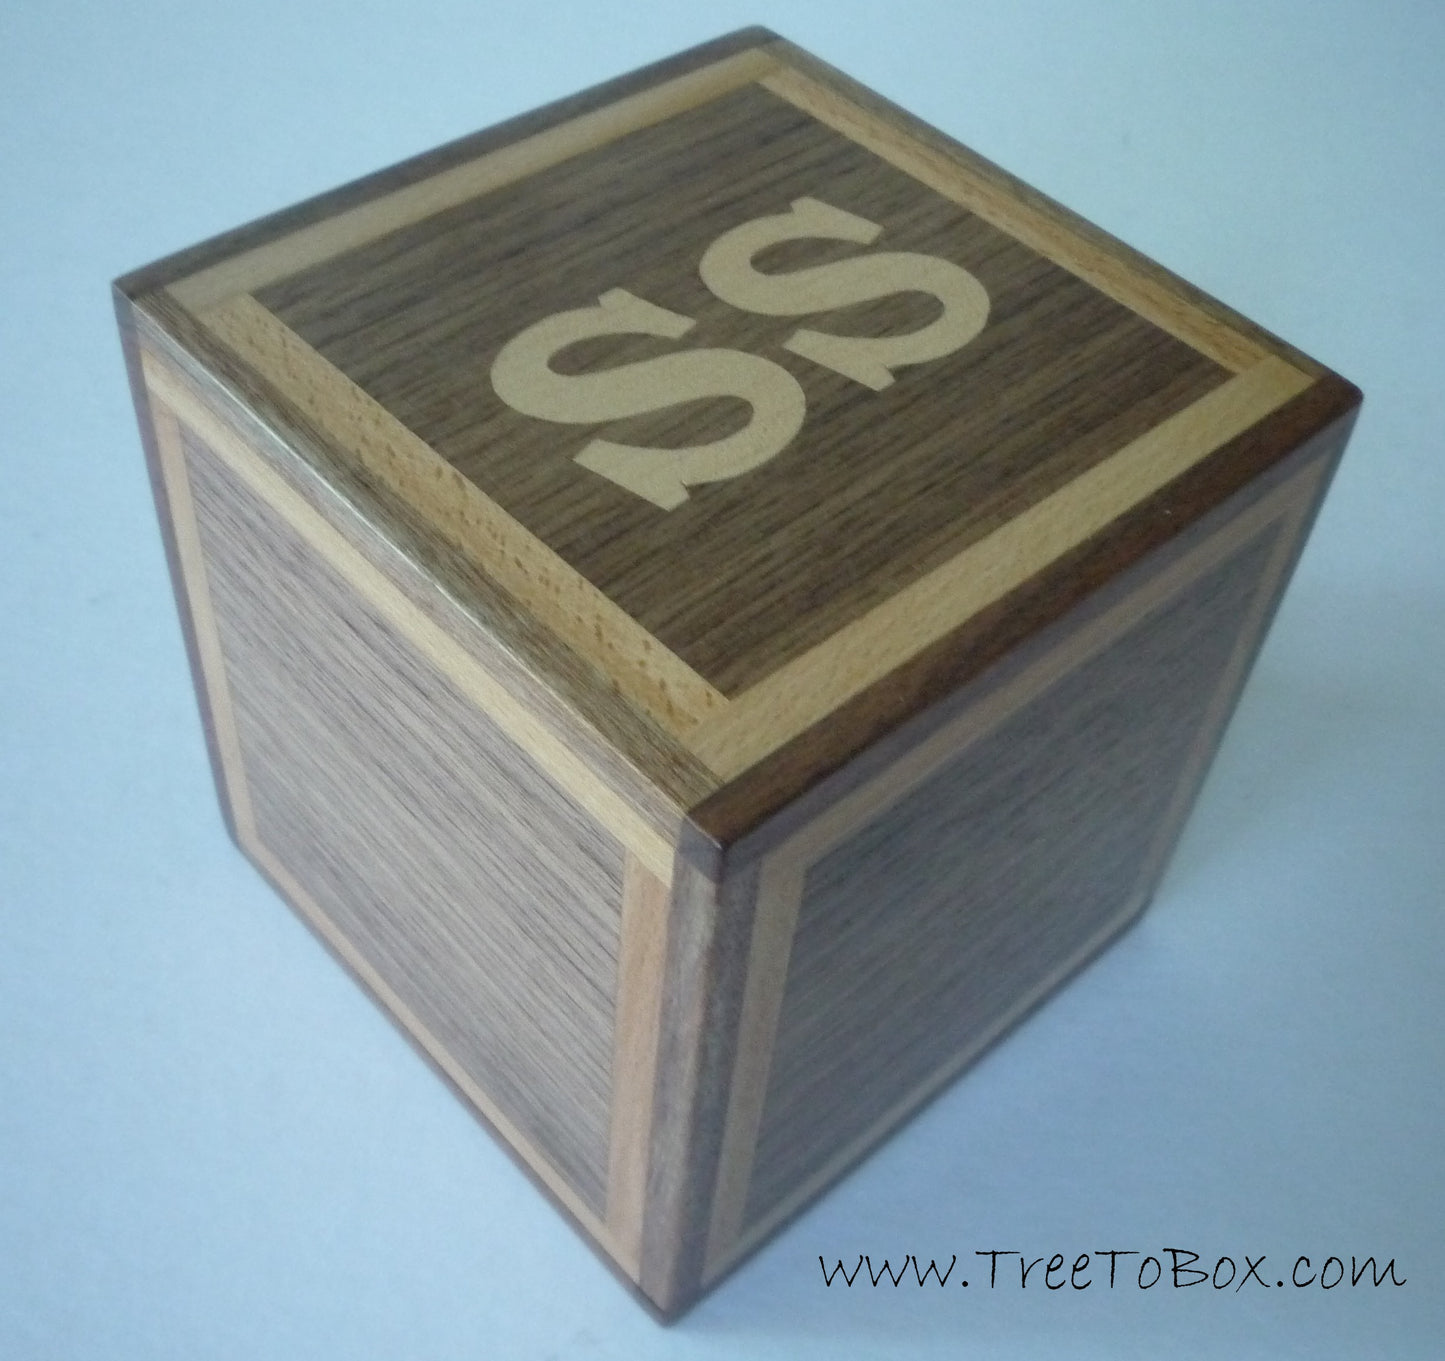 Custom Wooden Urns - TreeToBox